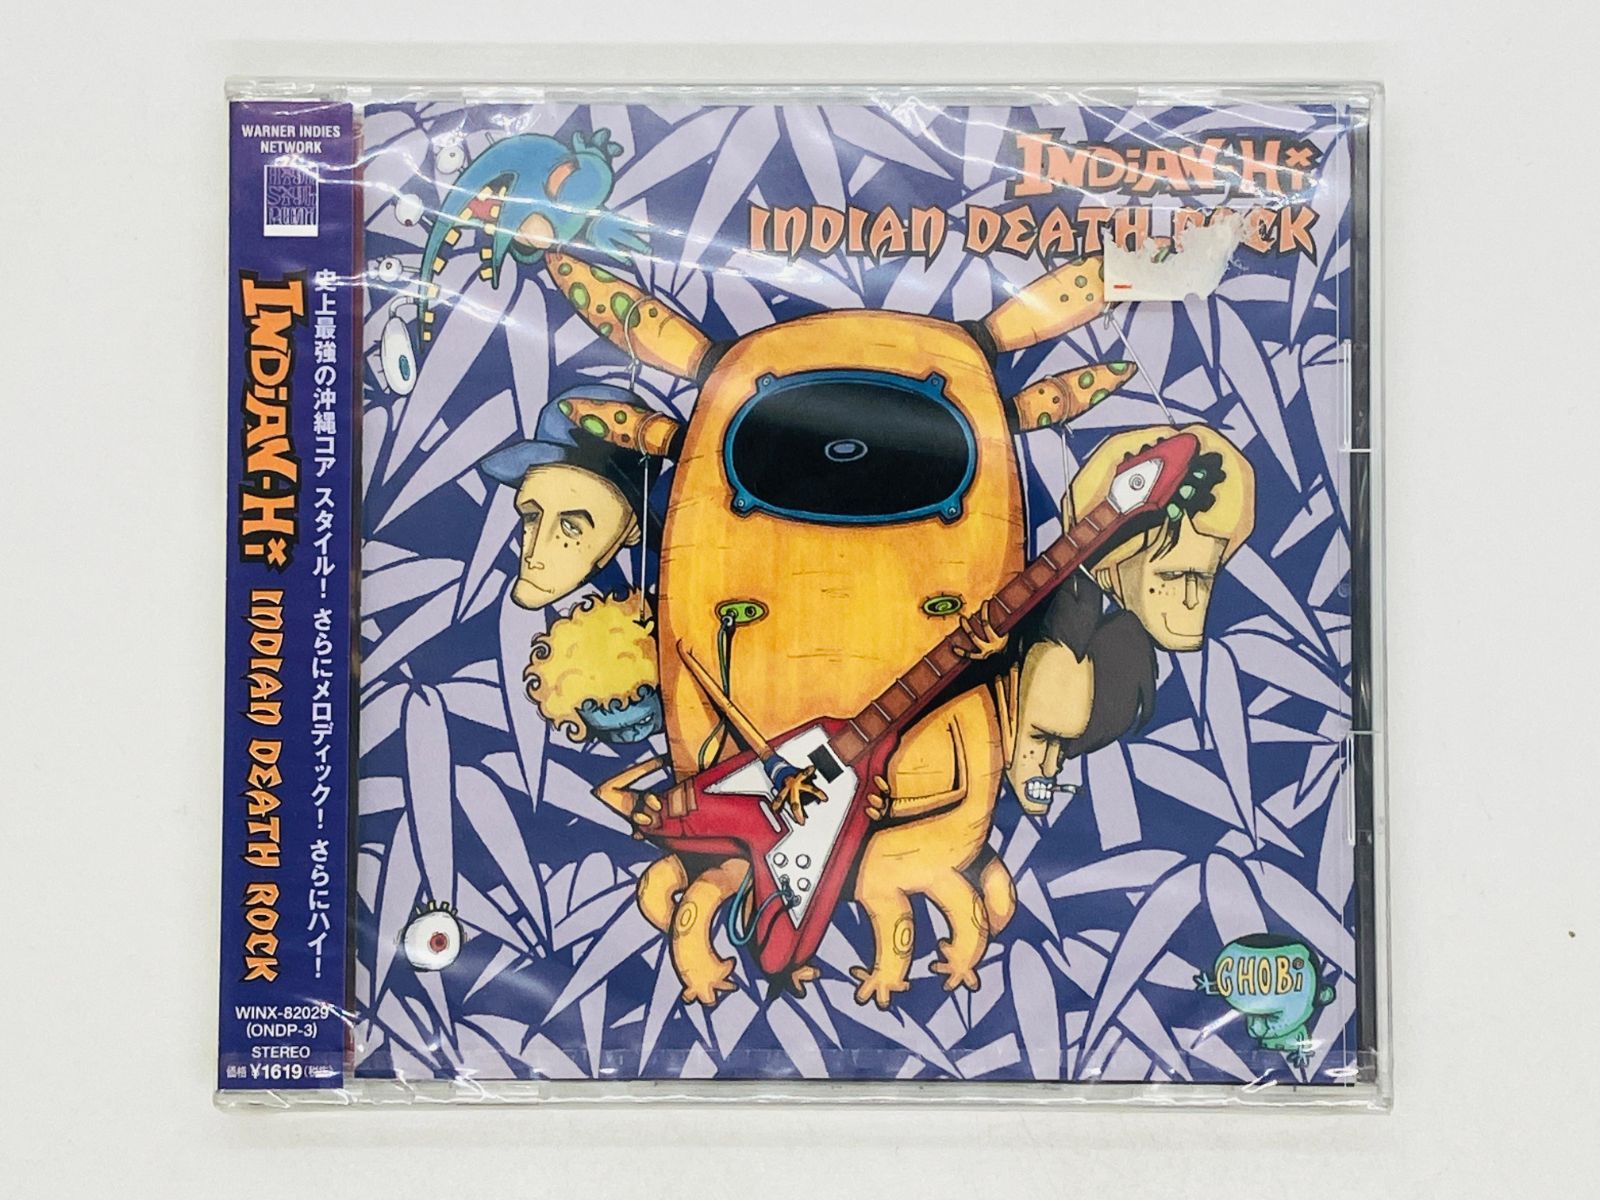 CD 未開封 INDiAN-Hi / INDIAN DEATH ROCK / インディアン・ハイ / インディアン・デス・ロック / 帯付き  WINX82029 N03 - メルカリ